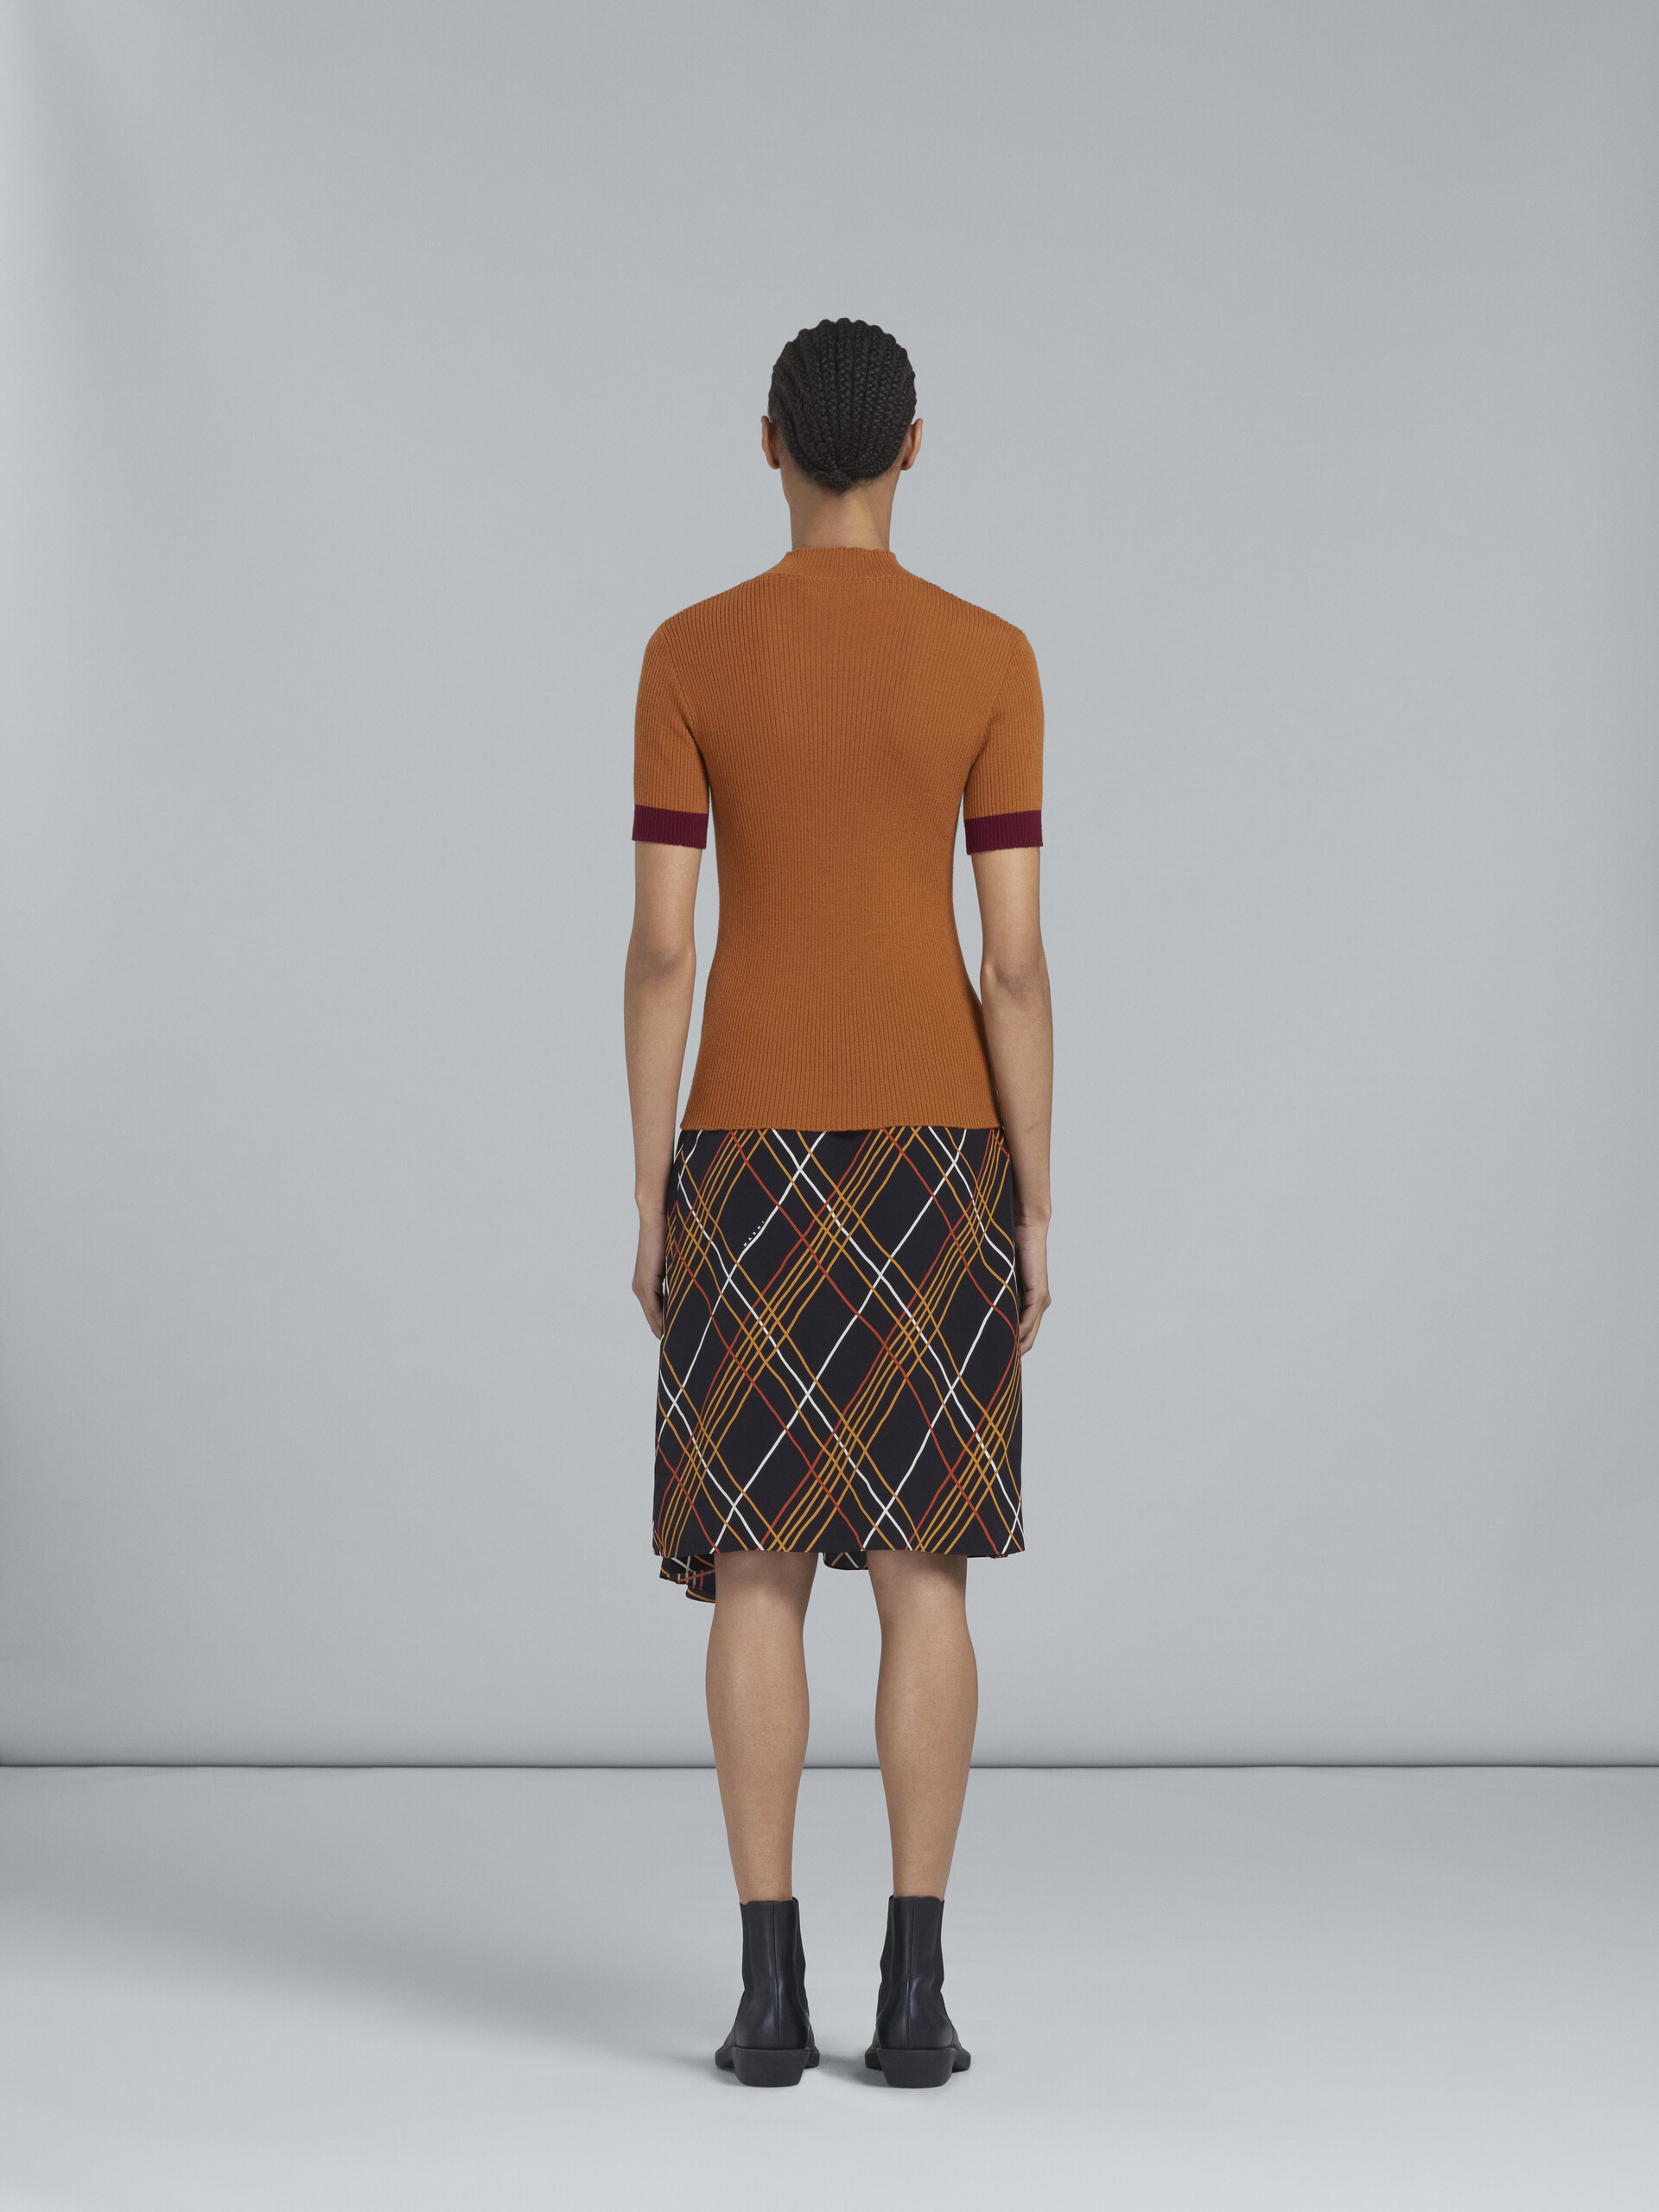 Wild Roads print skirt with godet hem - Skirts - Image 3